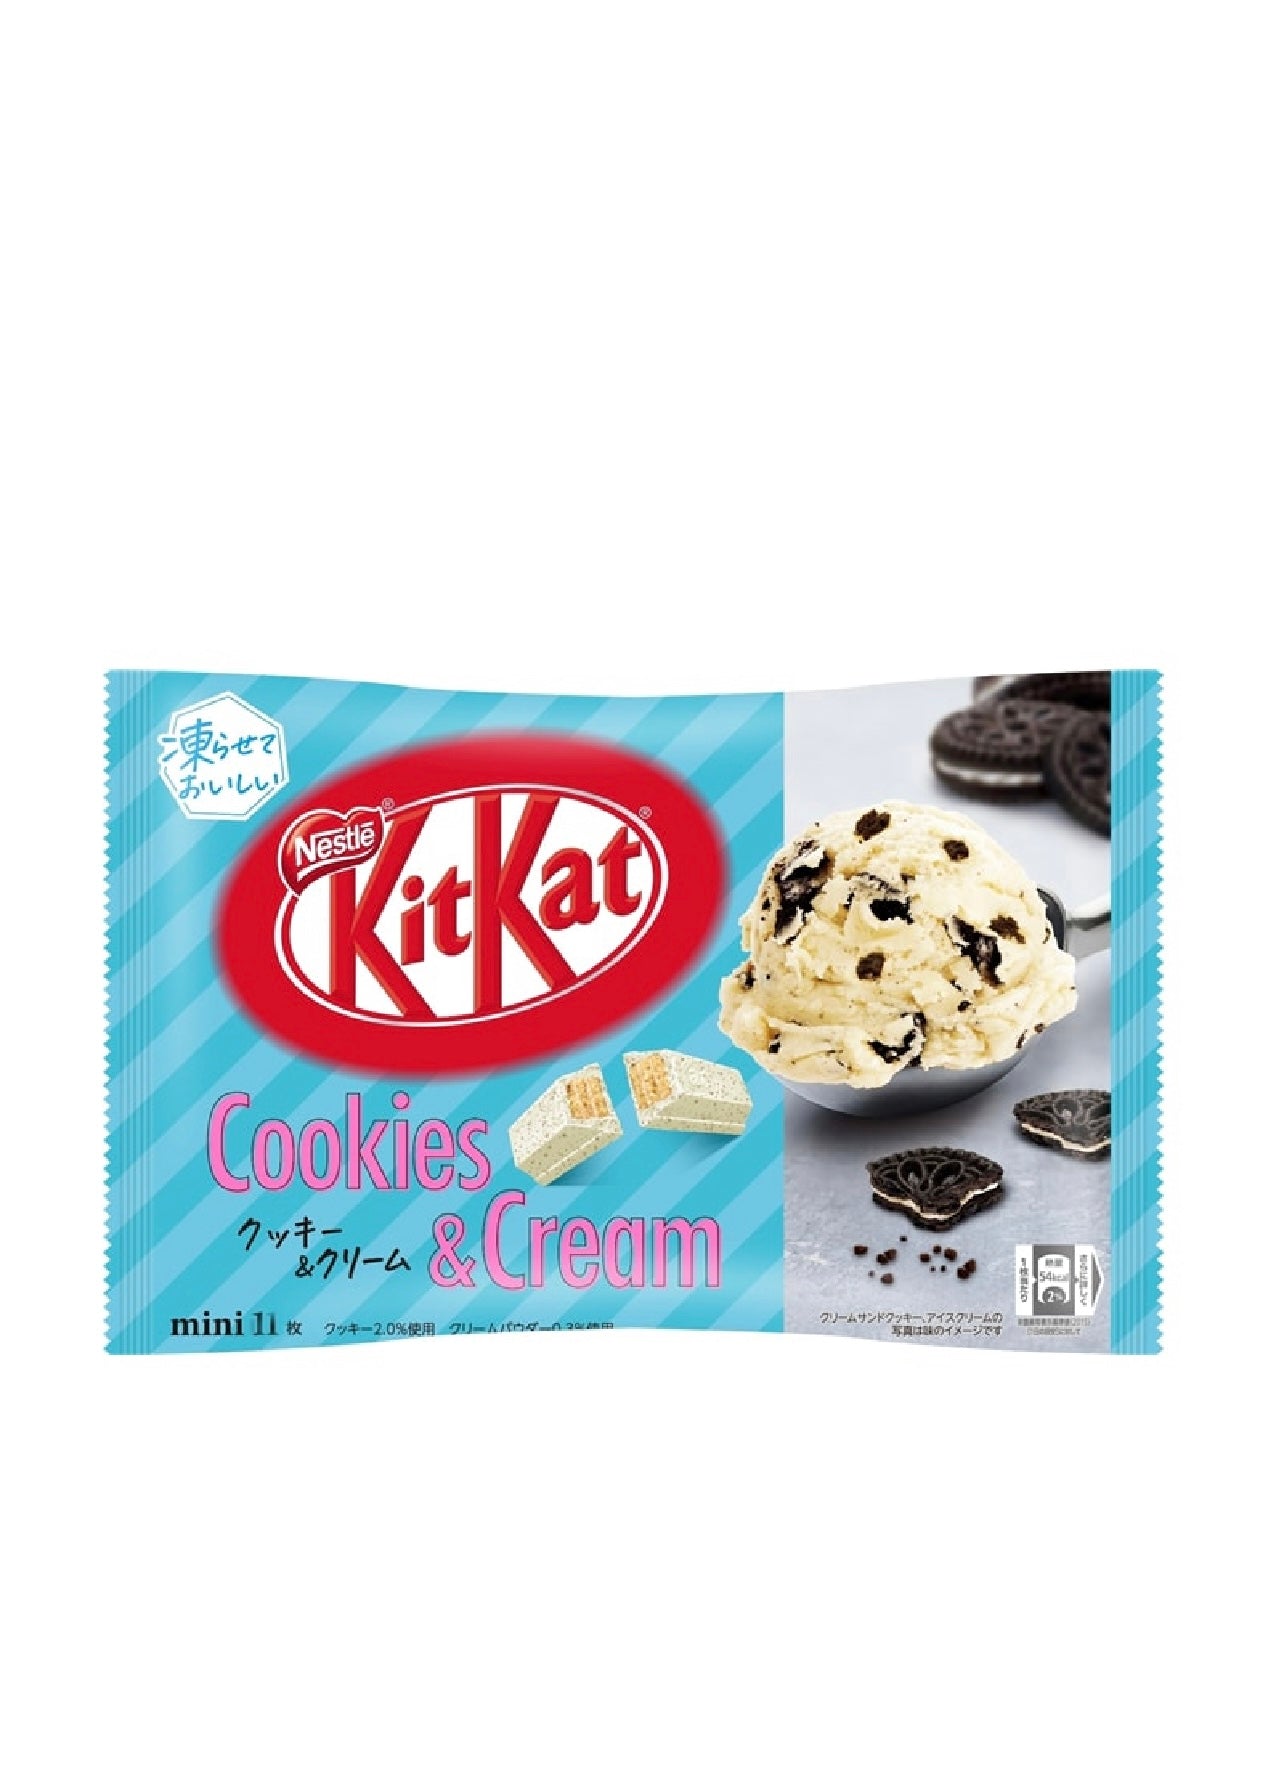 NESTLE JAPAN KIT KAT Cookies & cream Chocolate wafer
10pc updated packaging